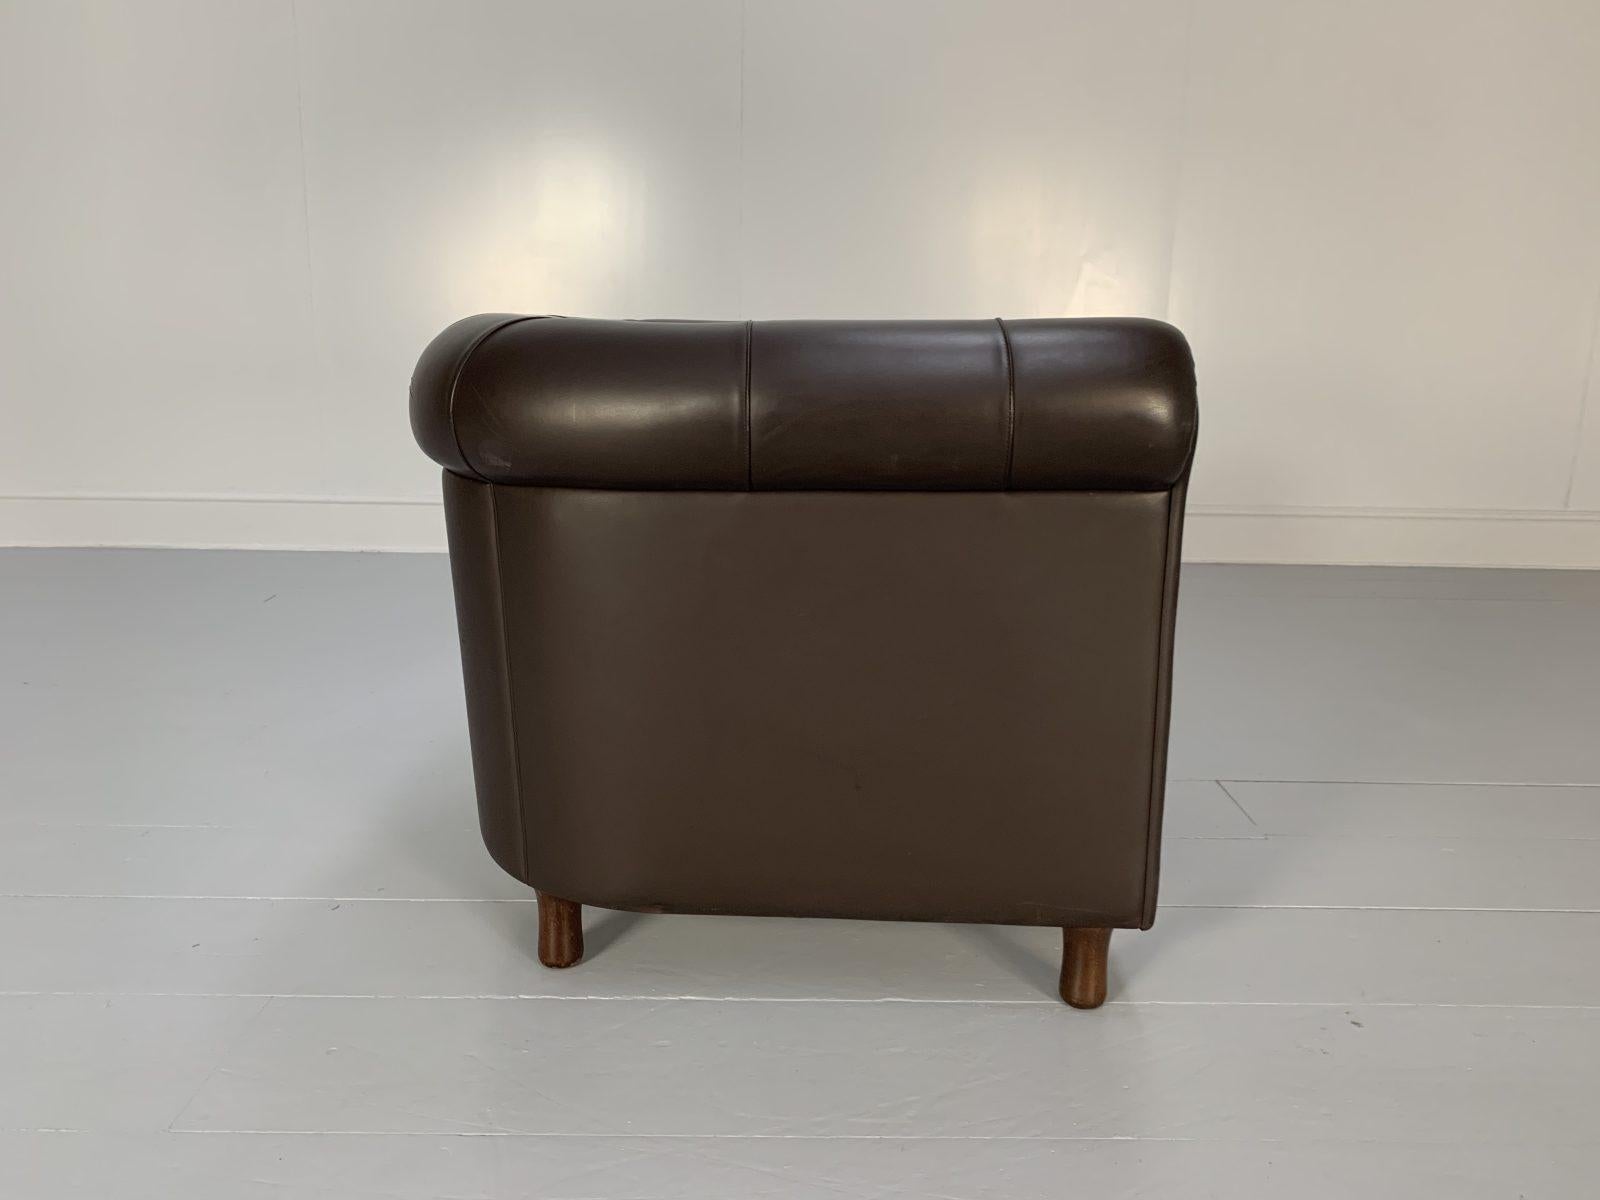 2 Poltrona Frau “Arcadia” Armchairs, in “Pelle Frau” Dark Brown Leather For Sale 2